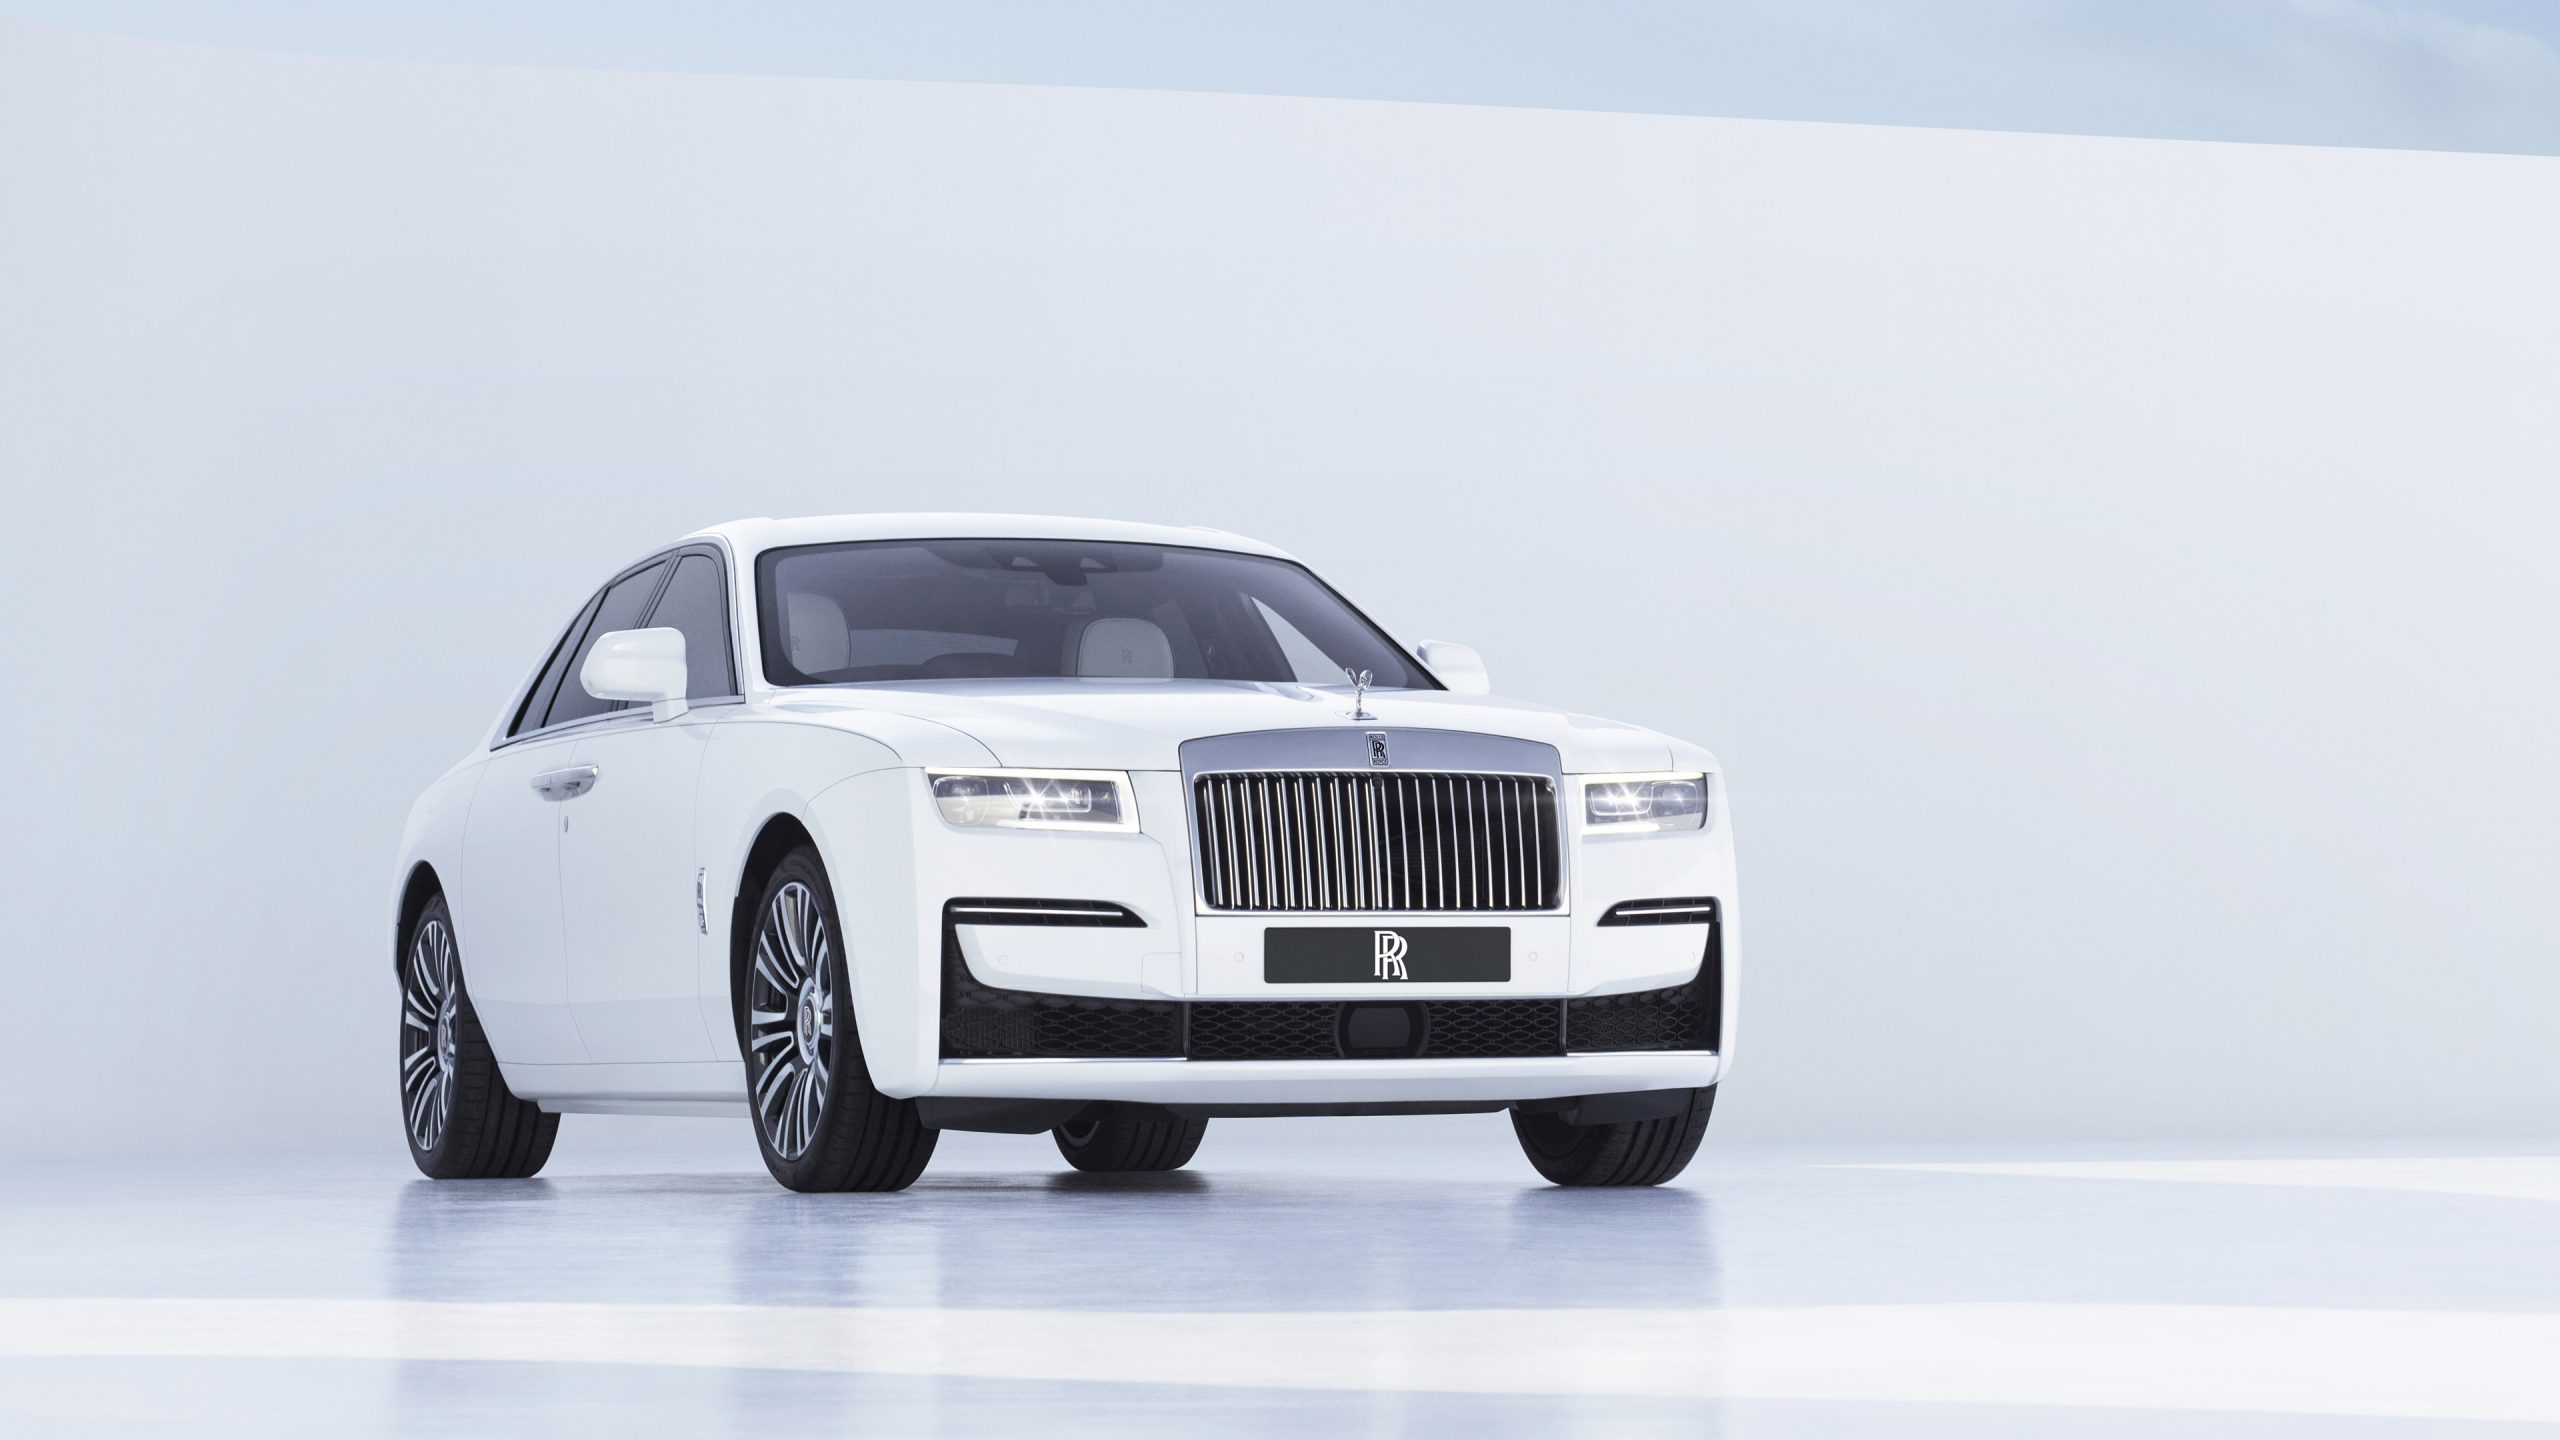 Tải xuống APK Rolls Royce Phantom Live Wallpaper 2020 4K Photo cho Android